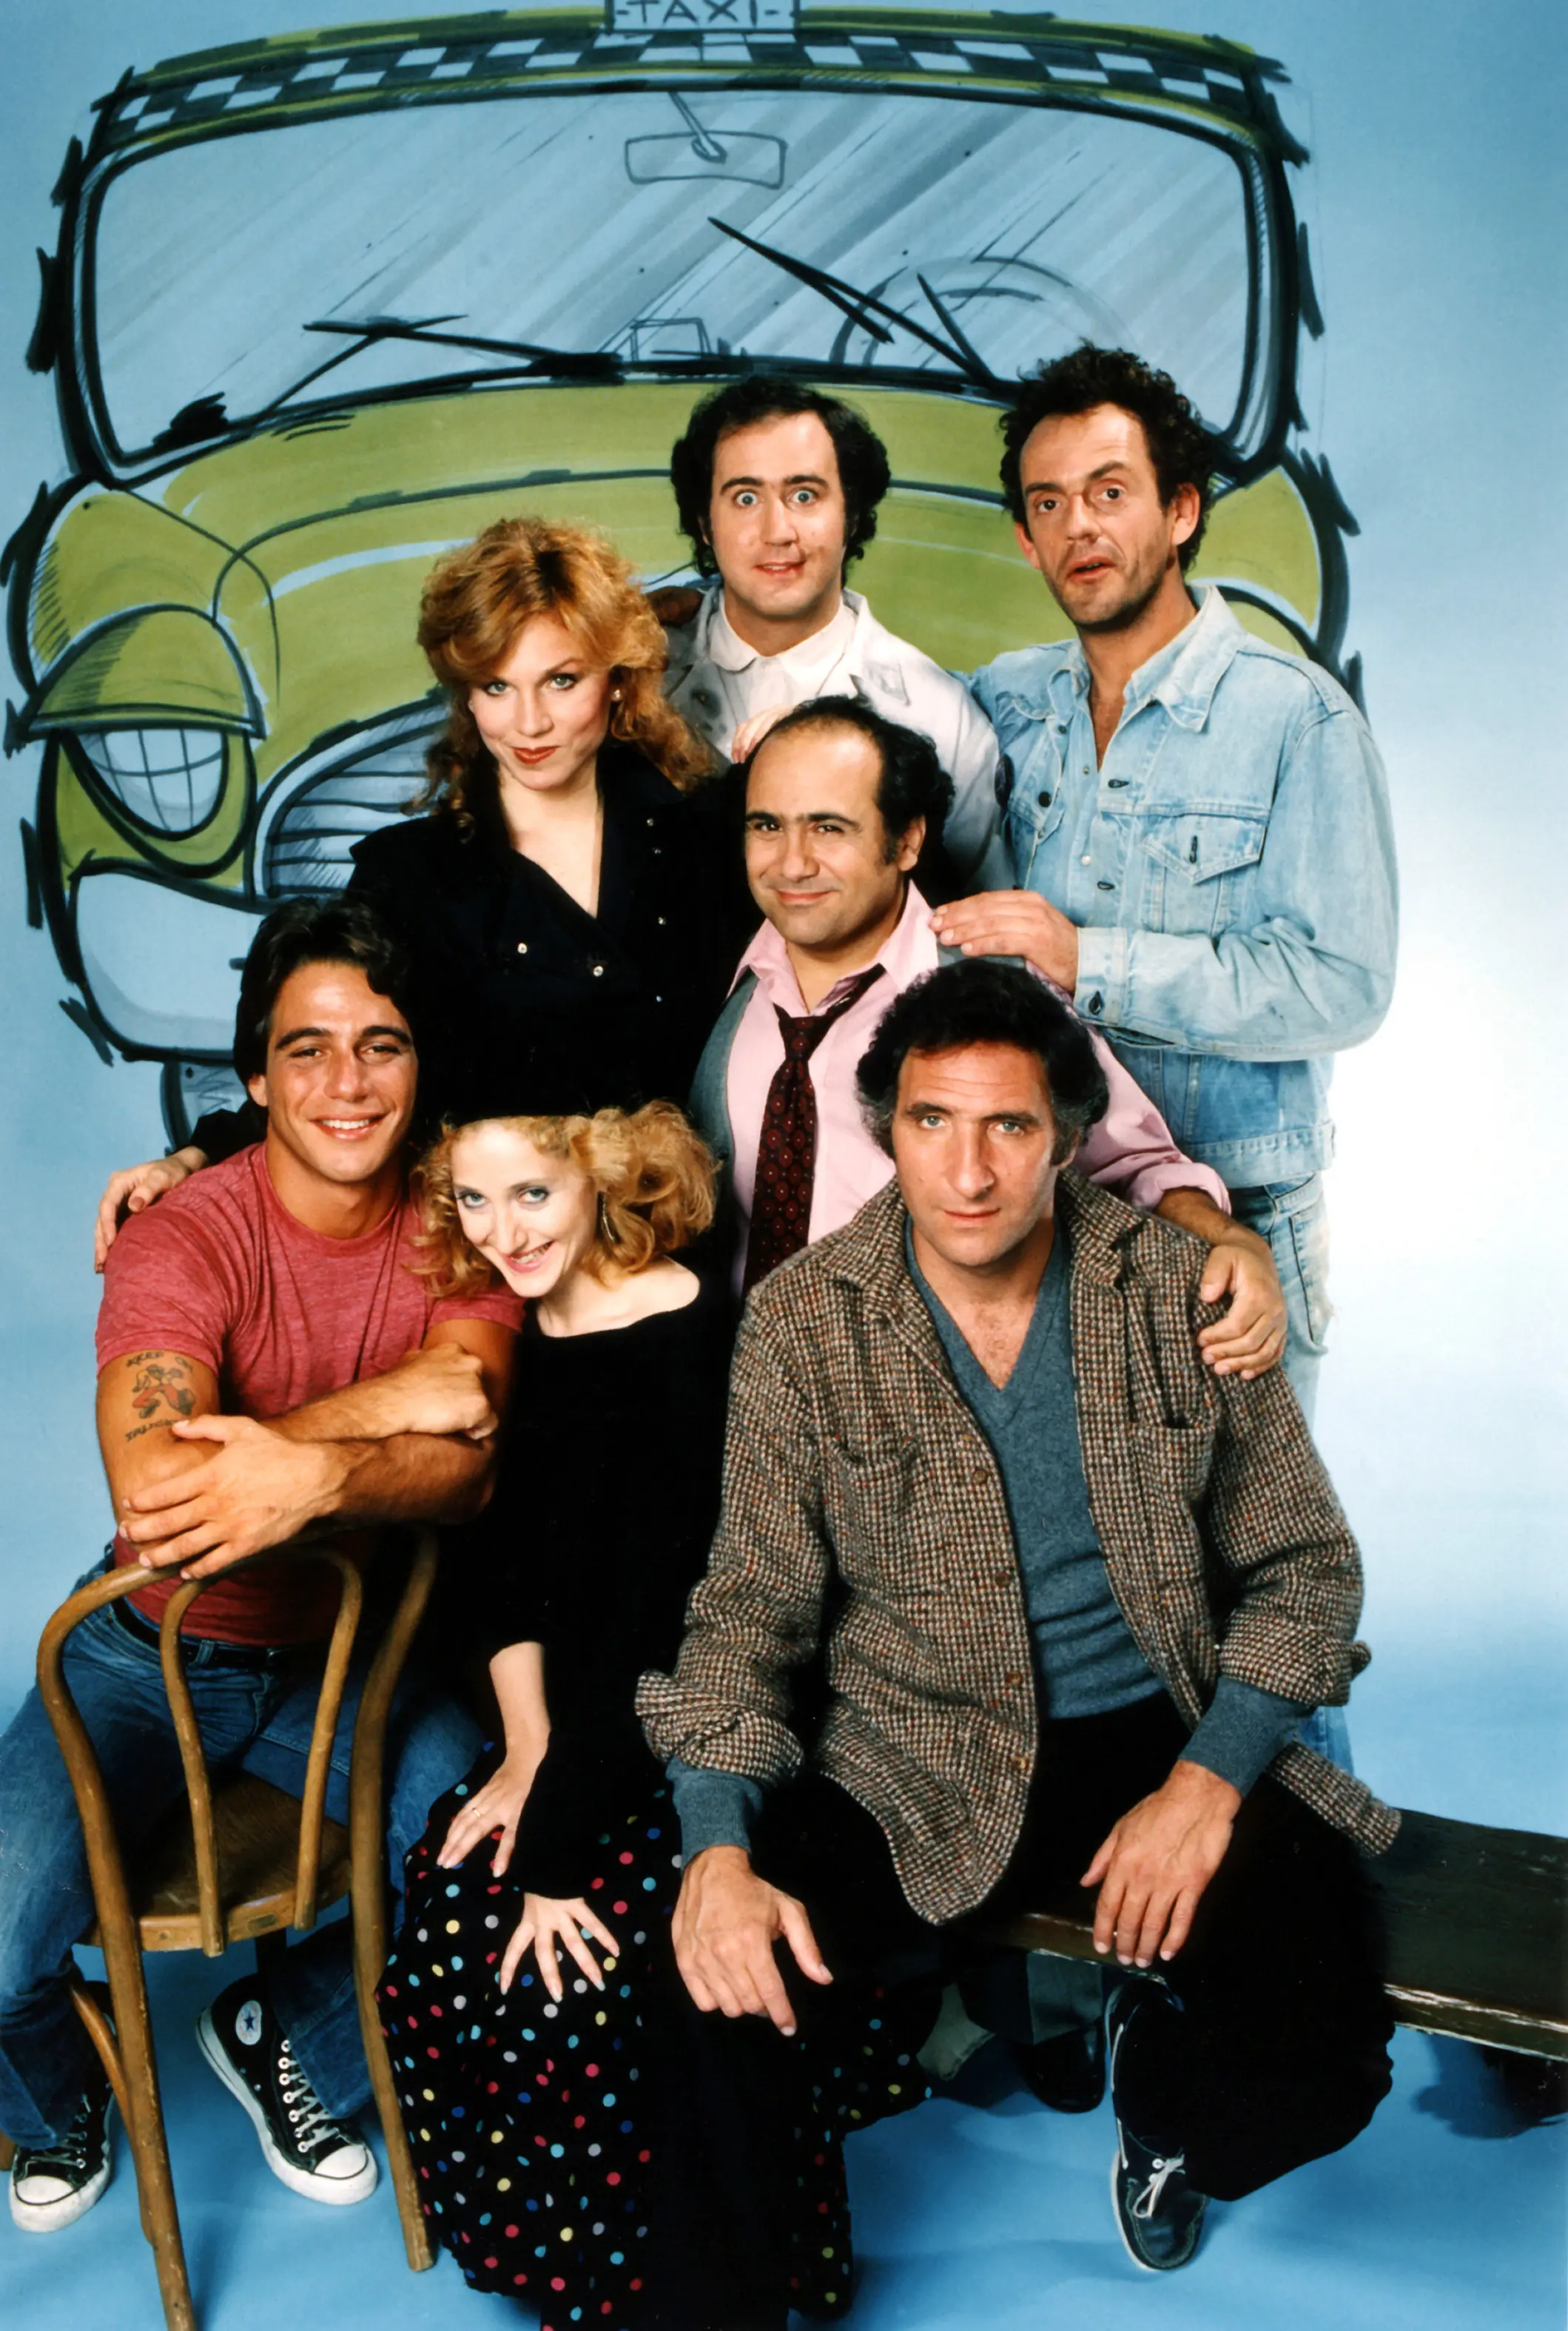  Tony Danza, Carol Kane, Judd Hirsch, Marilu Henner, Danny DeVito, Andy Kaufman, Christopher Lloyd taxi cast